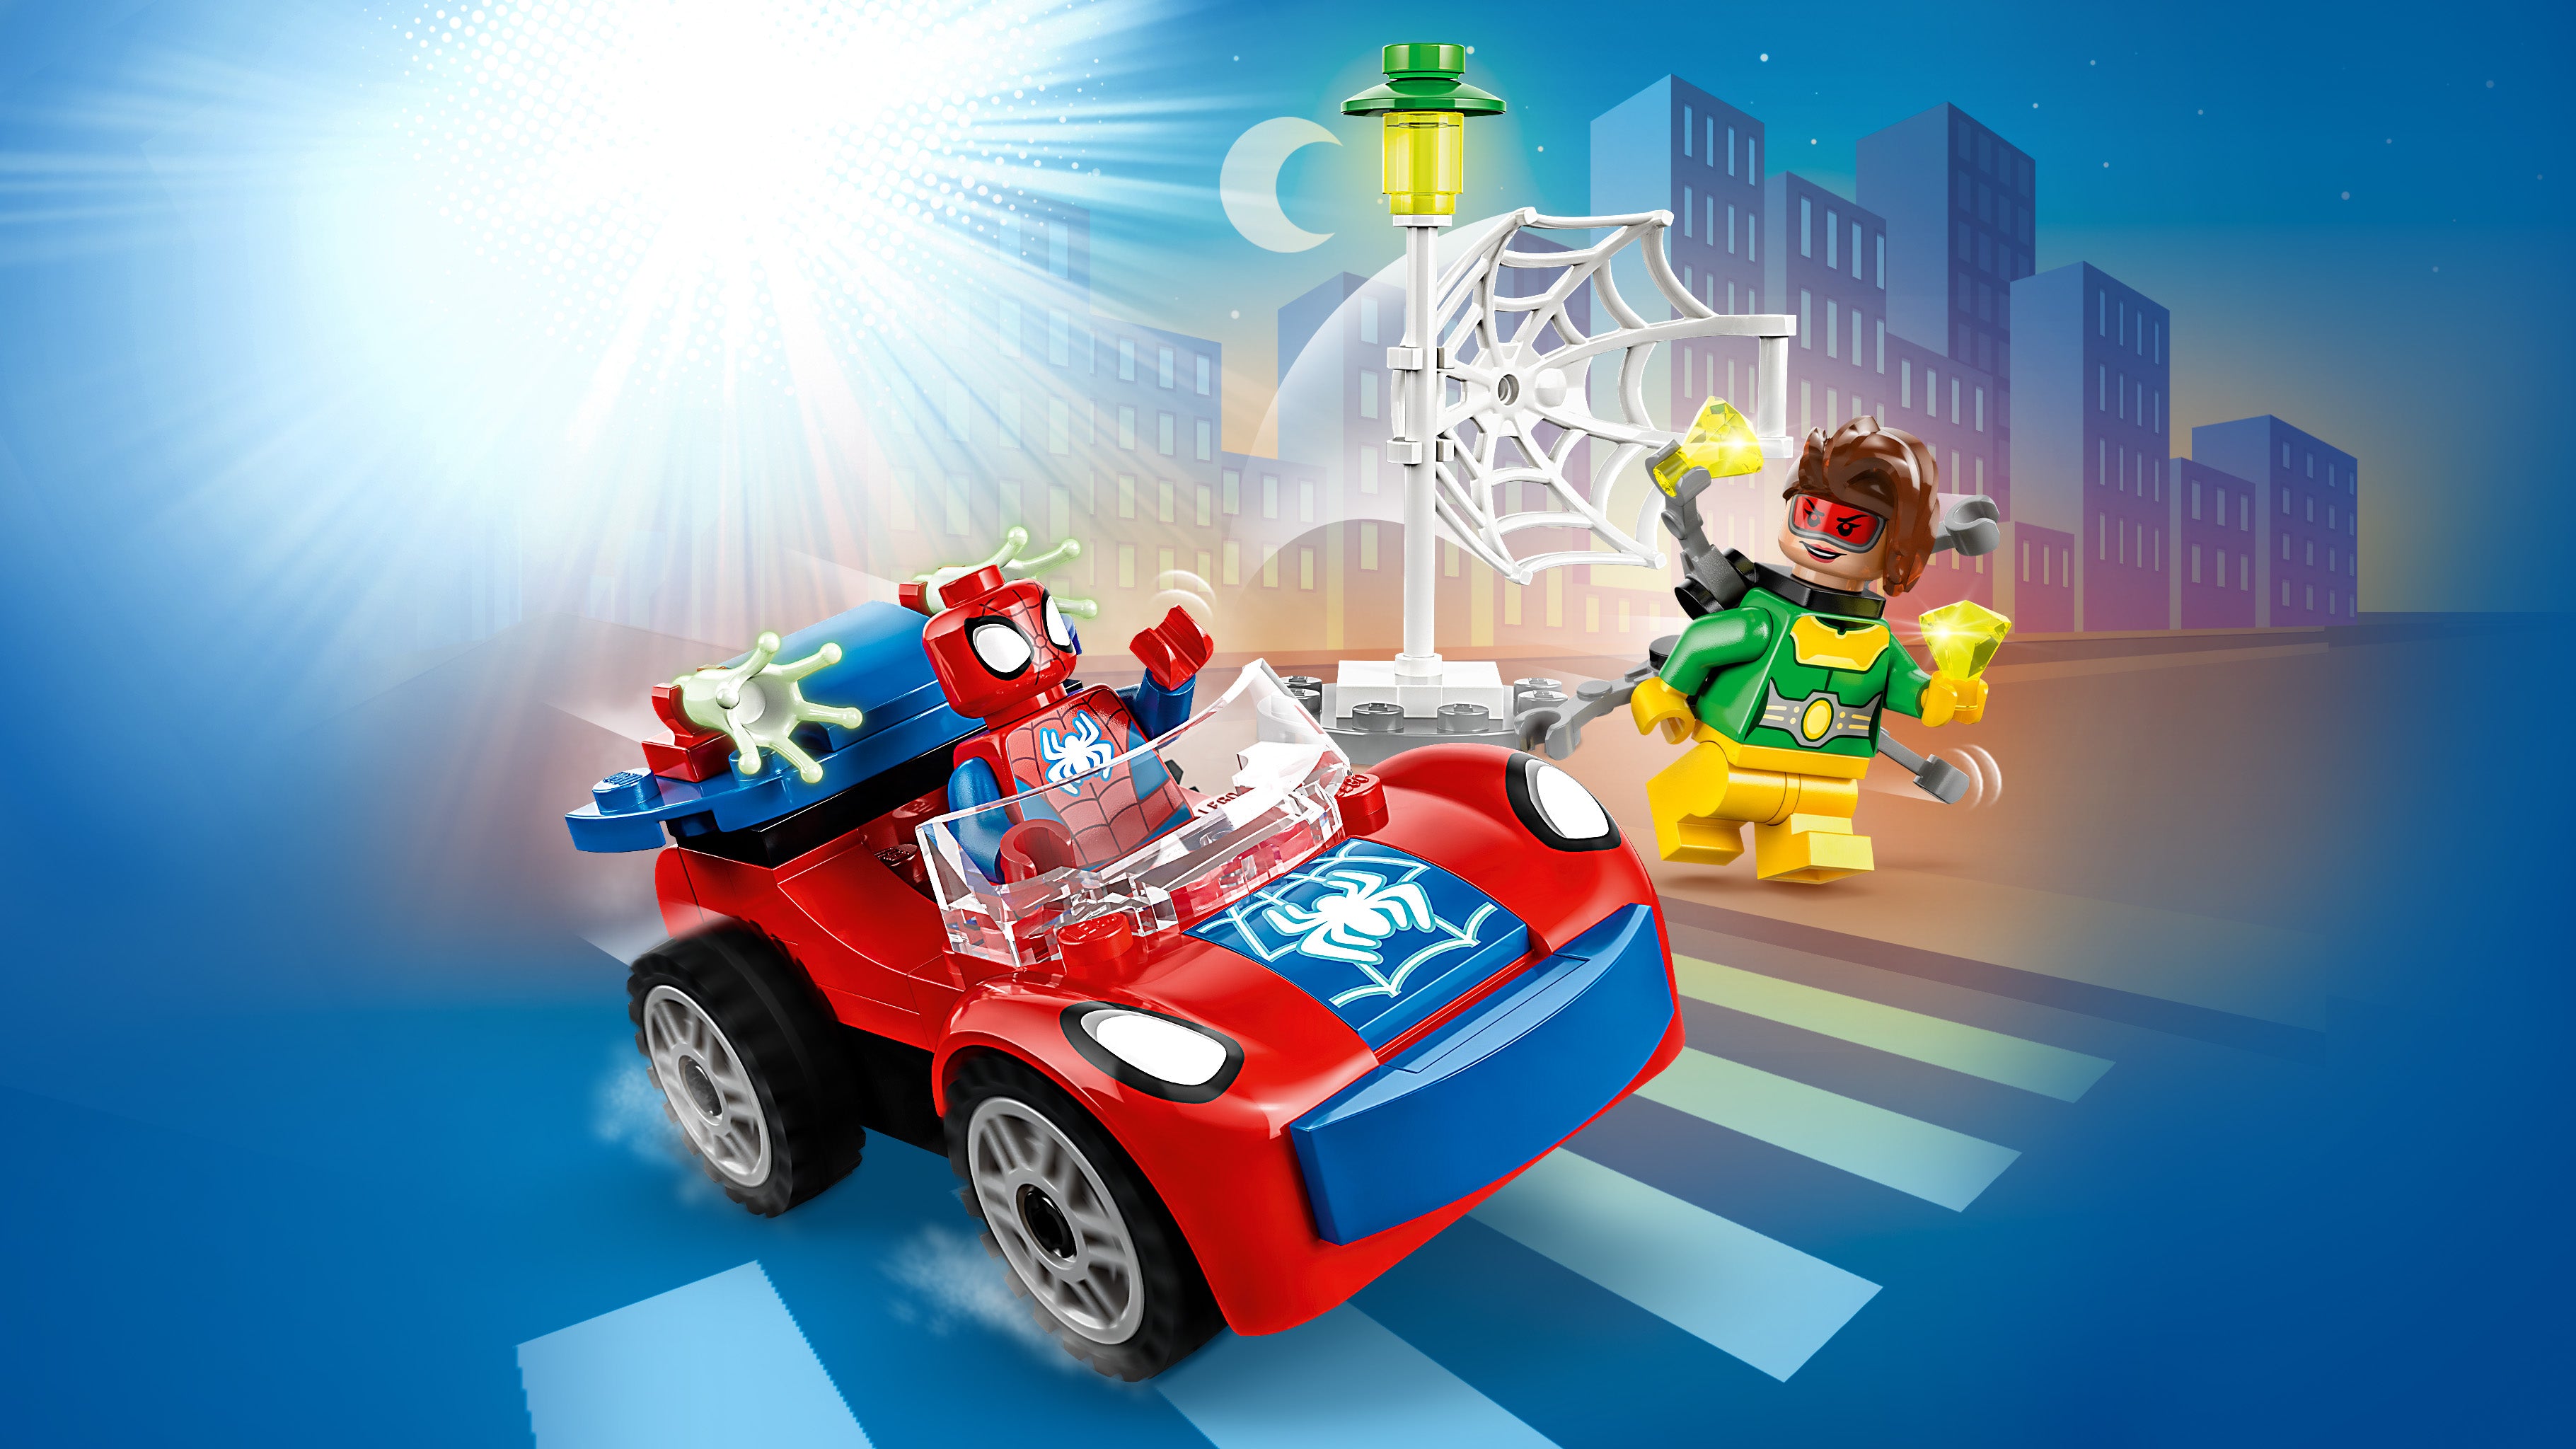 Lego 10789 Spider-Mans Car and Doc Oc